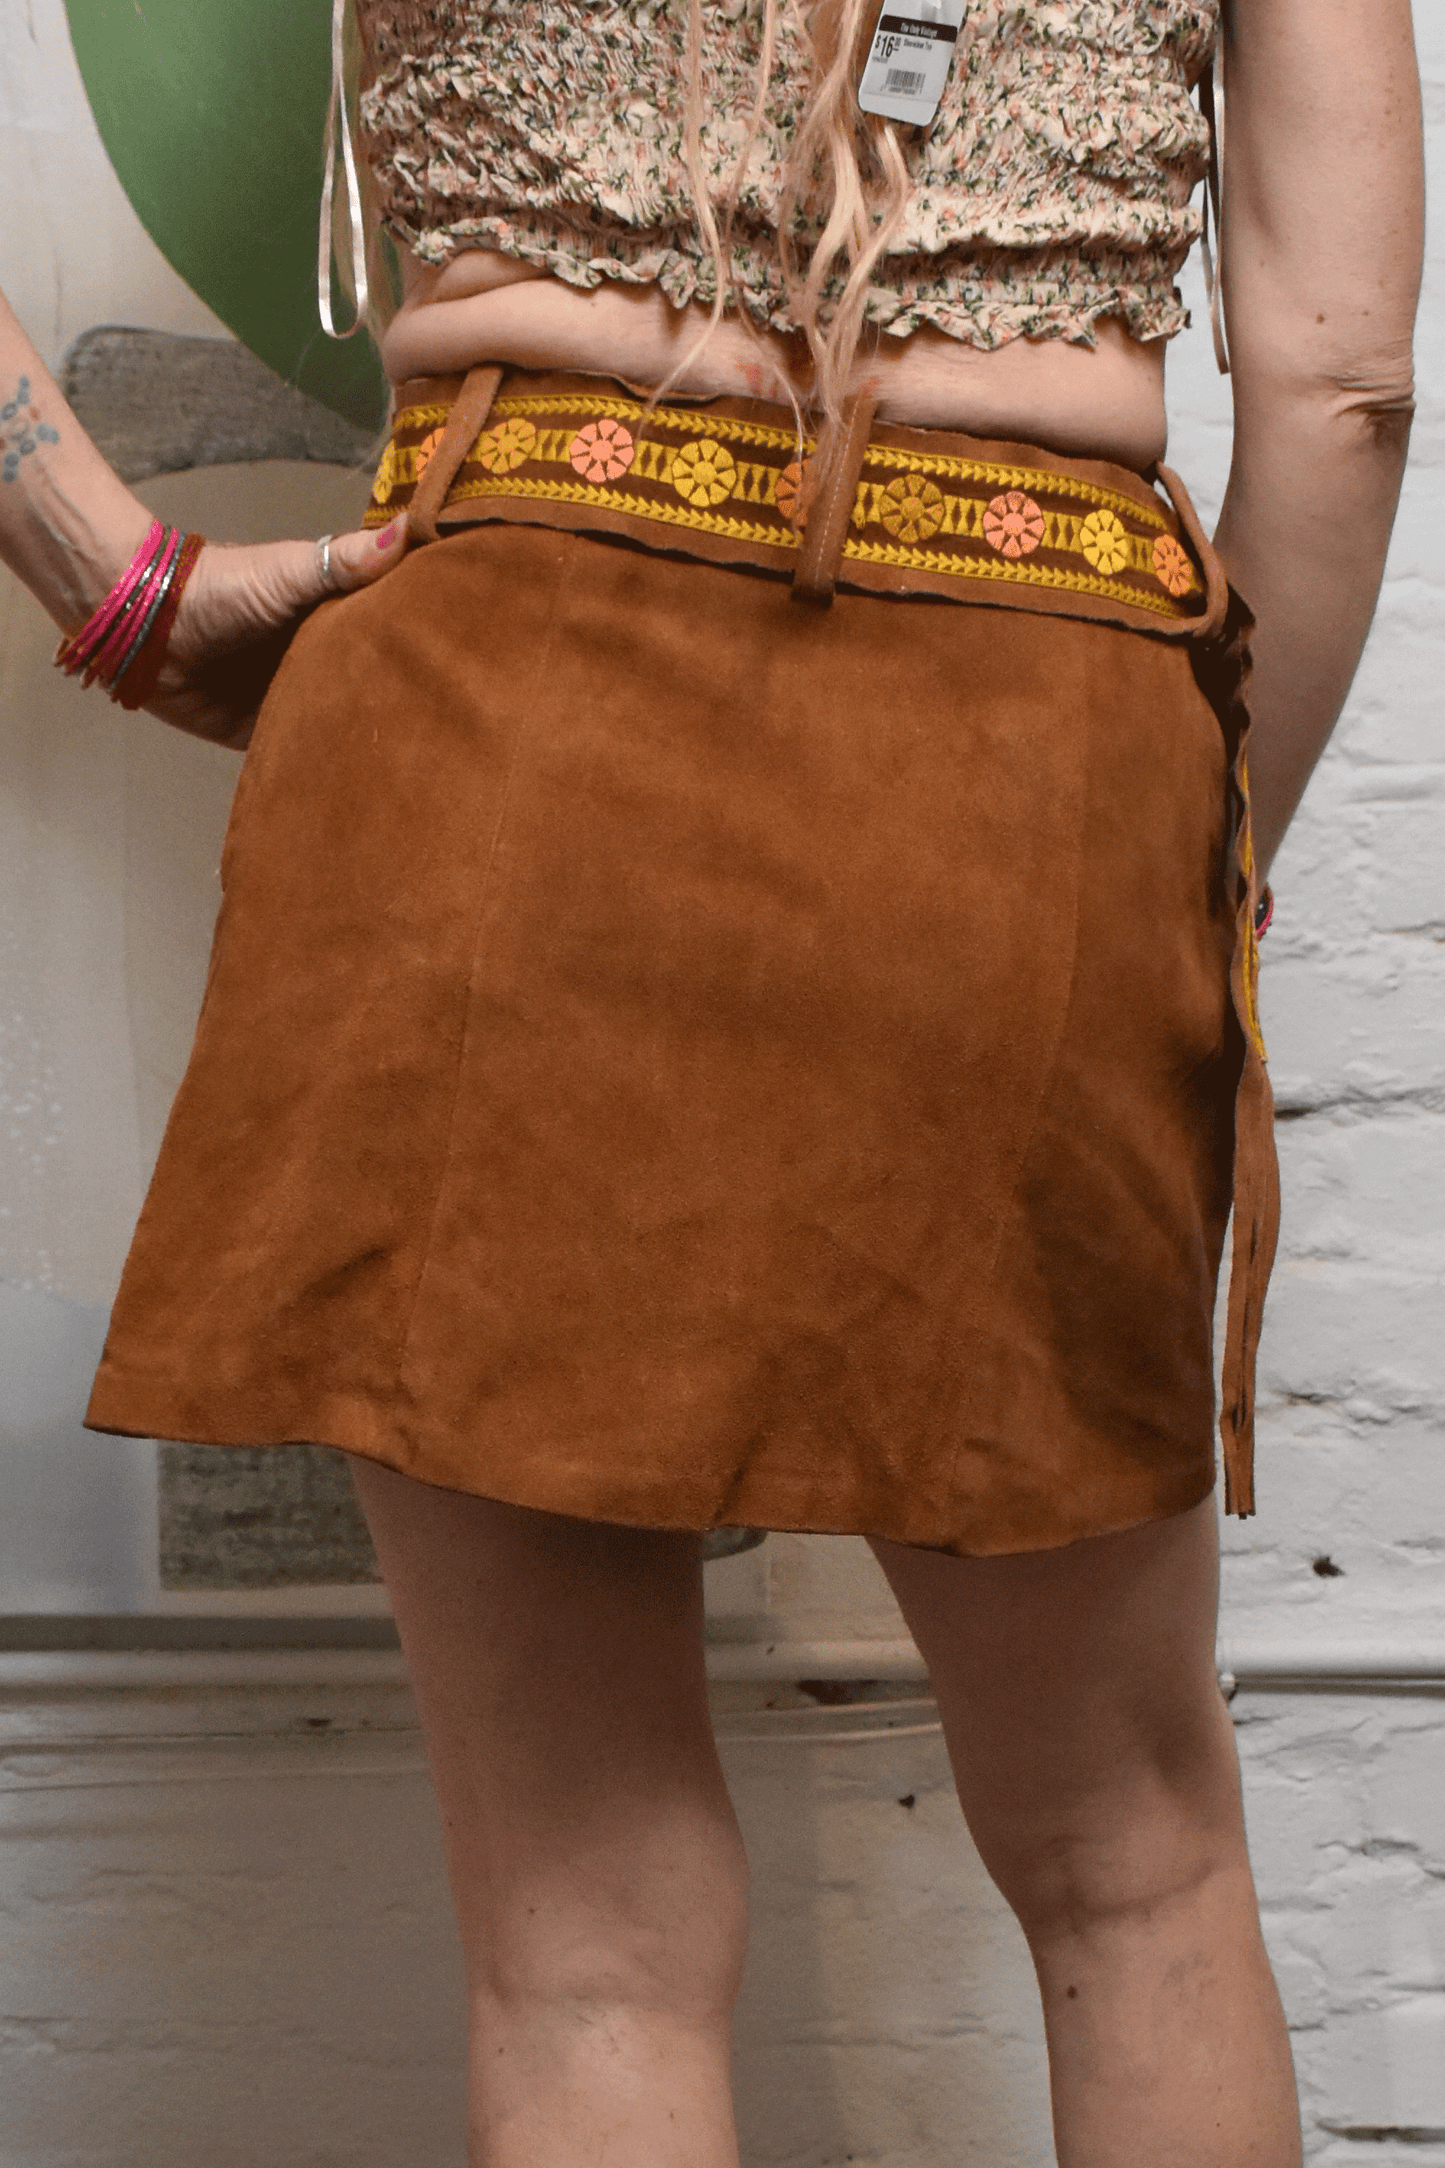 Vintage 1960's/1970s Camel Suede Leather Belted Mini Skirt